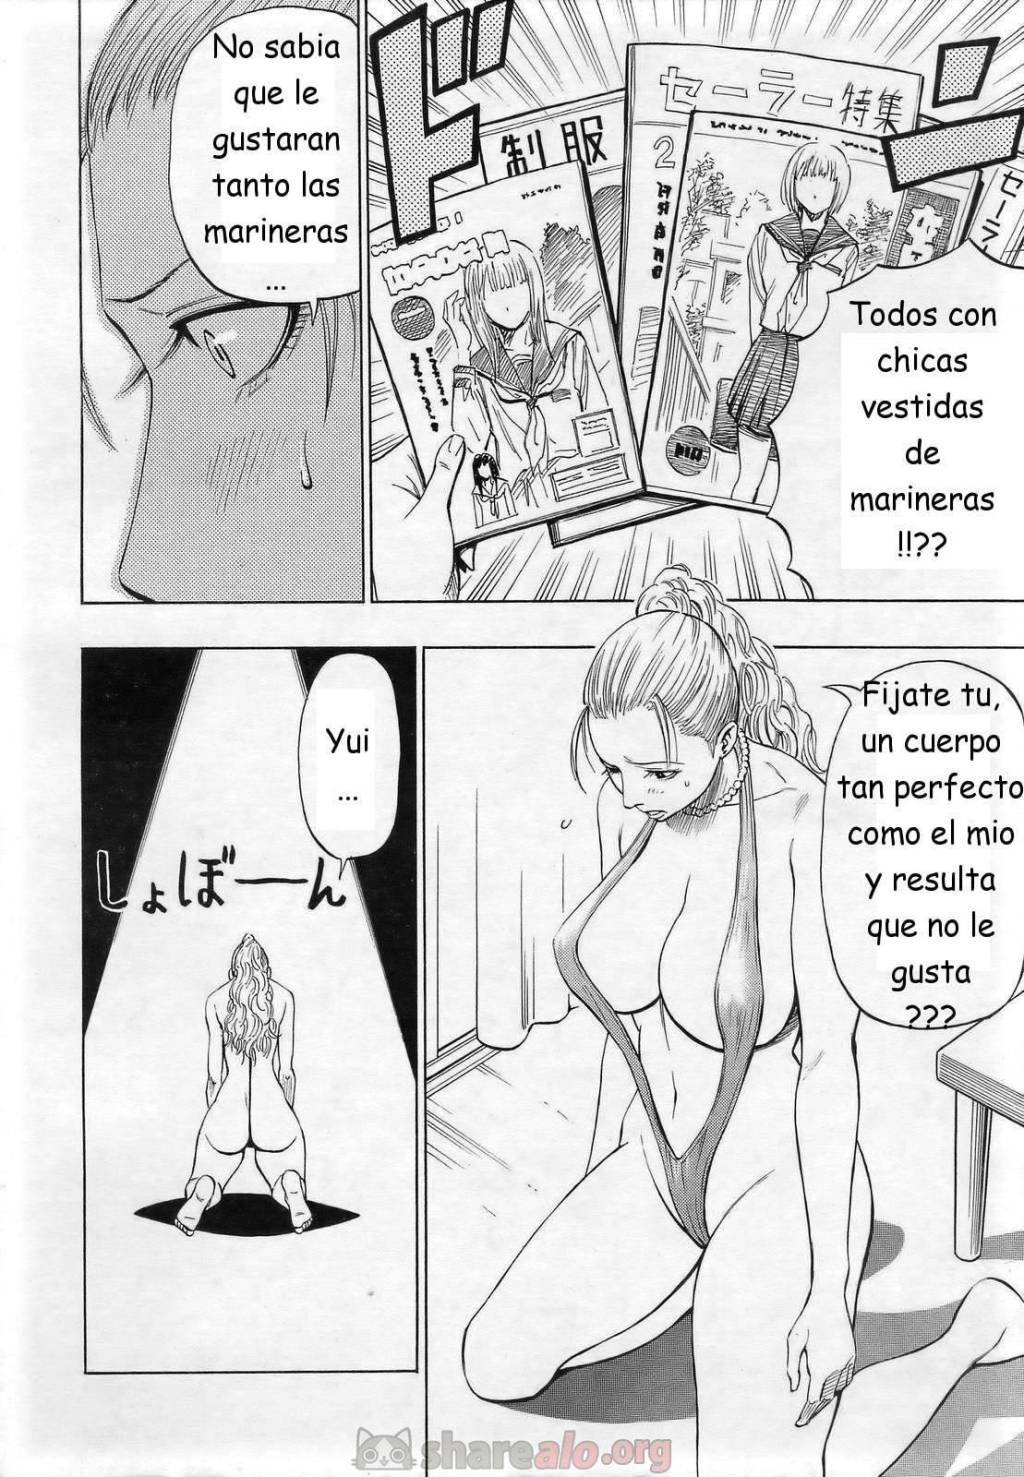 Sailor Mama (Mama Marinerita) - 6 - Comics Porno - Hentai Manga - Cartoon XXX